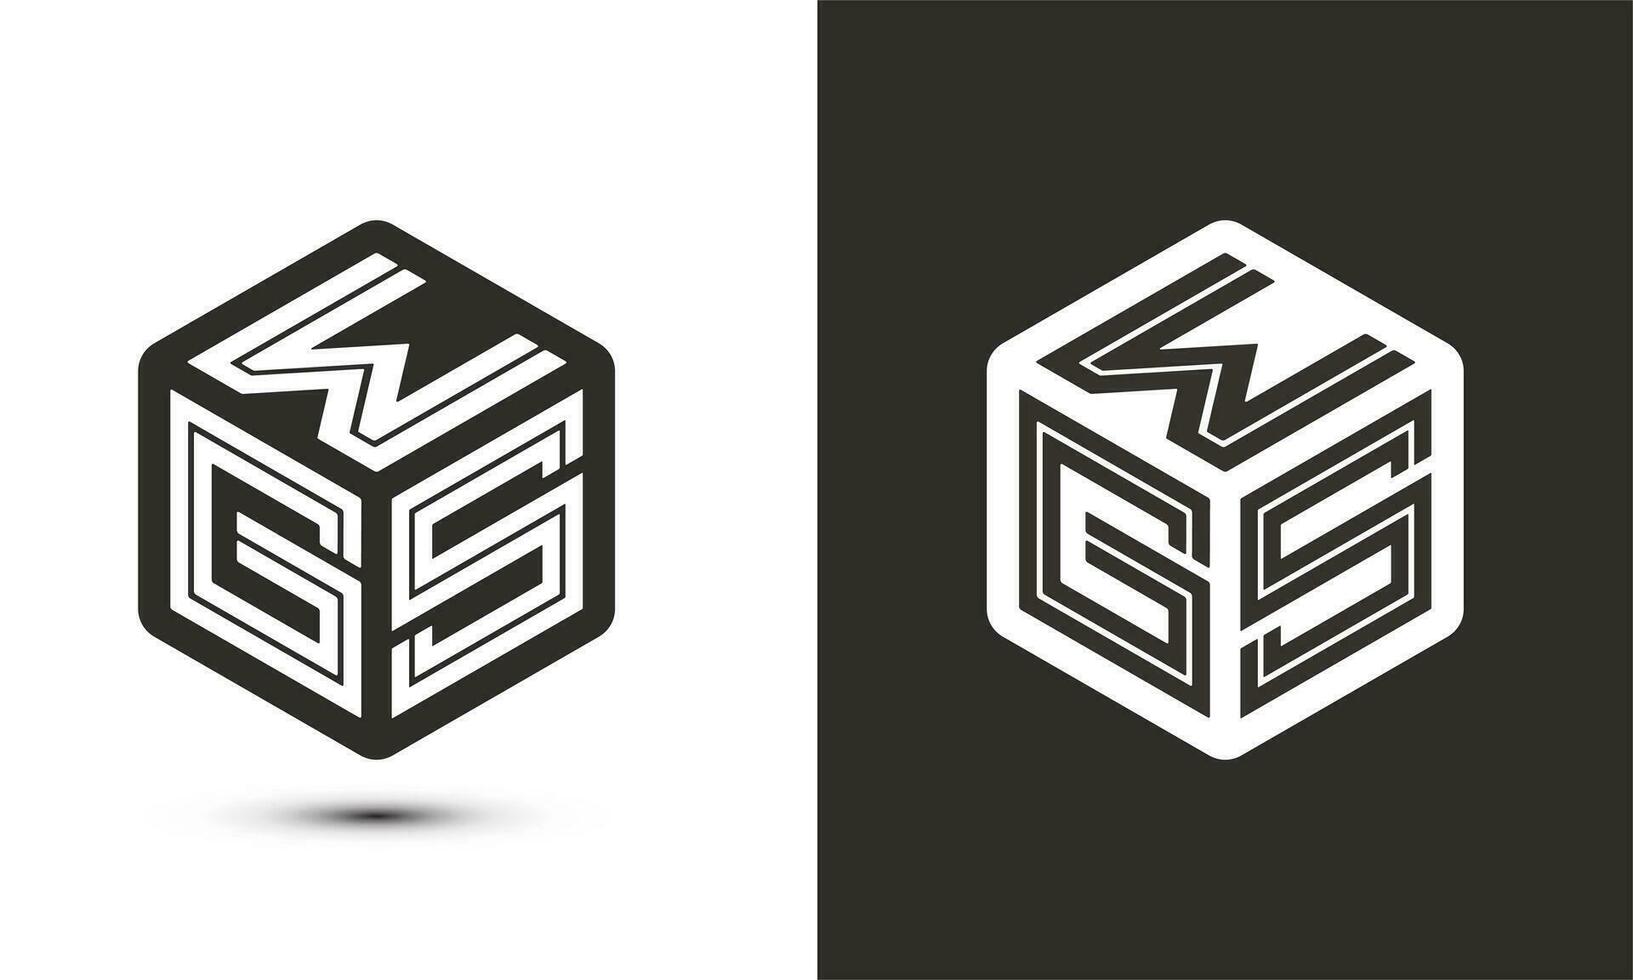 W G S letter logo design with illustrator cube logo, vector logo modern alphabet font overlap style. Premium Business logo icon. White color on black background